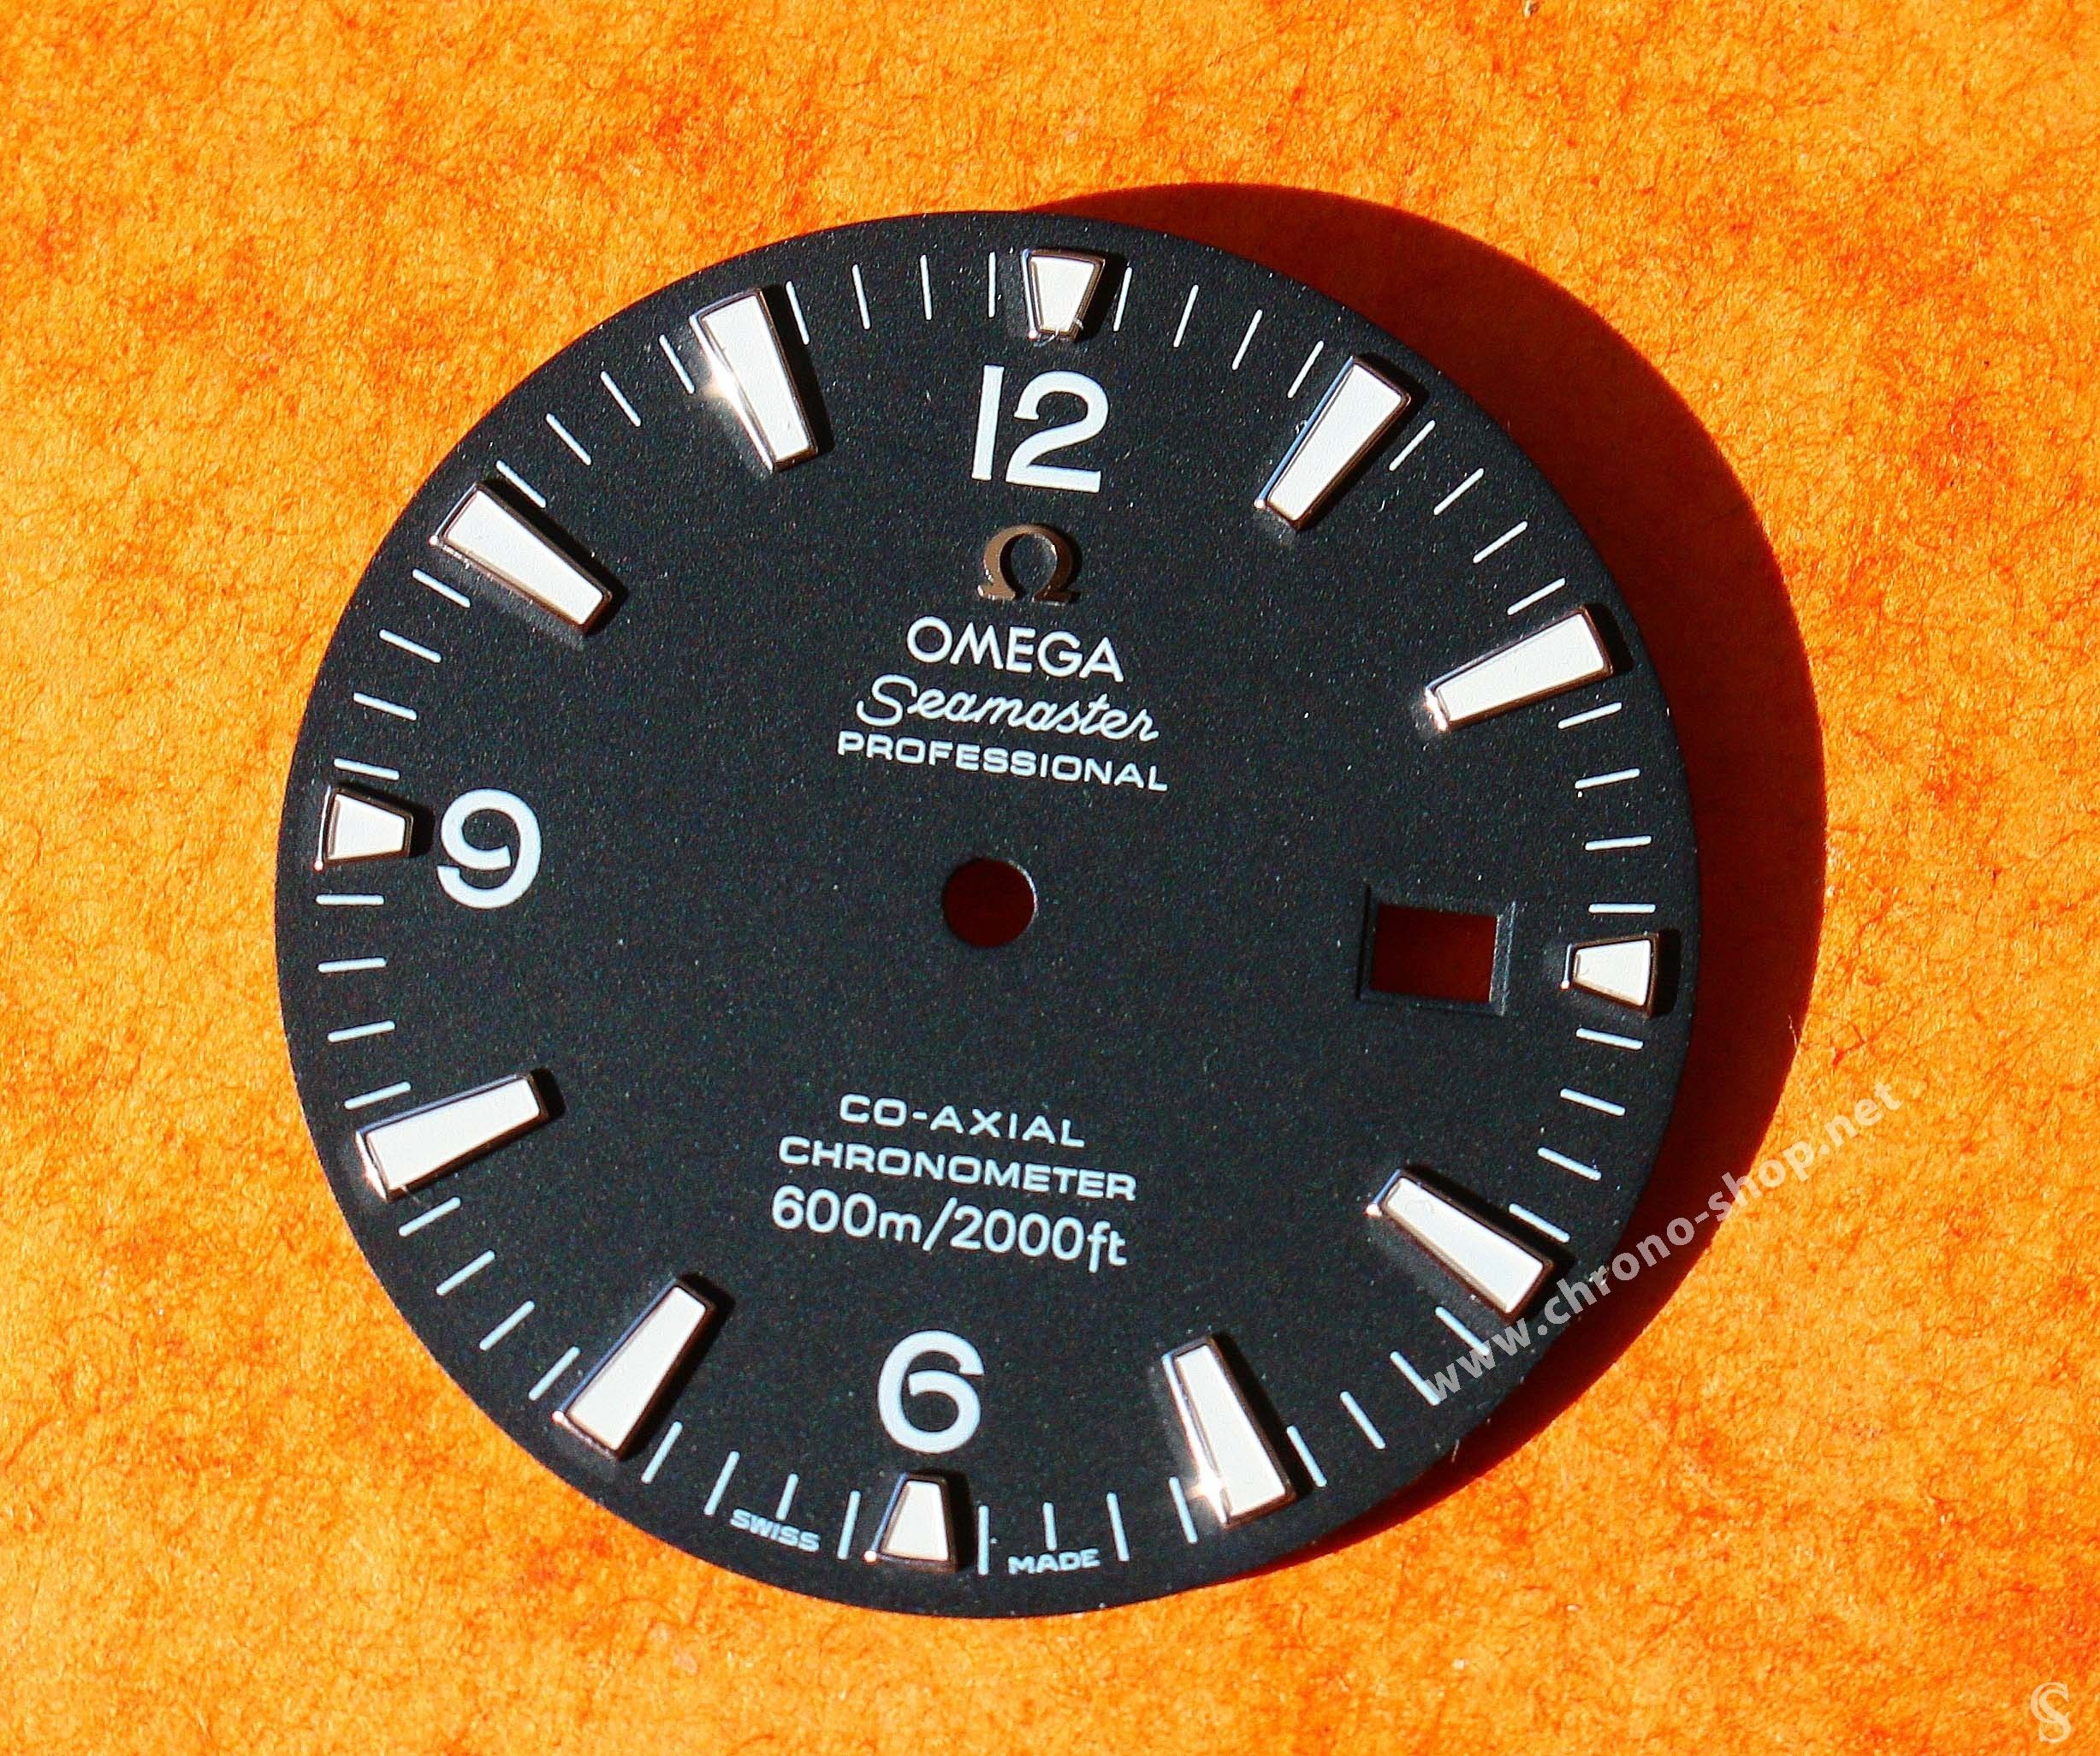 45mm omega planet ocean chronograph